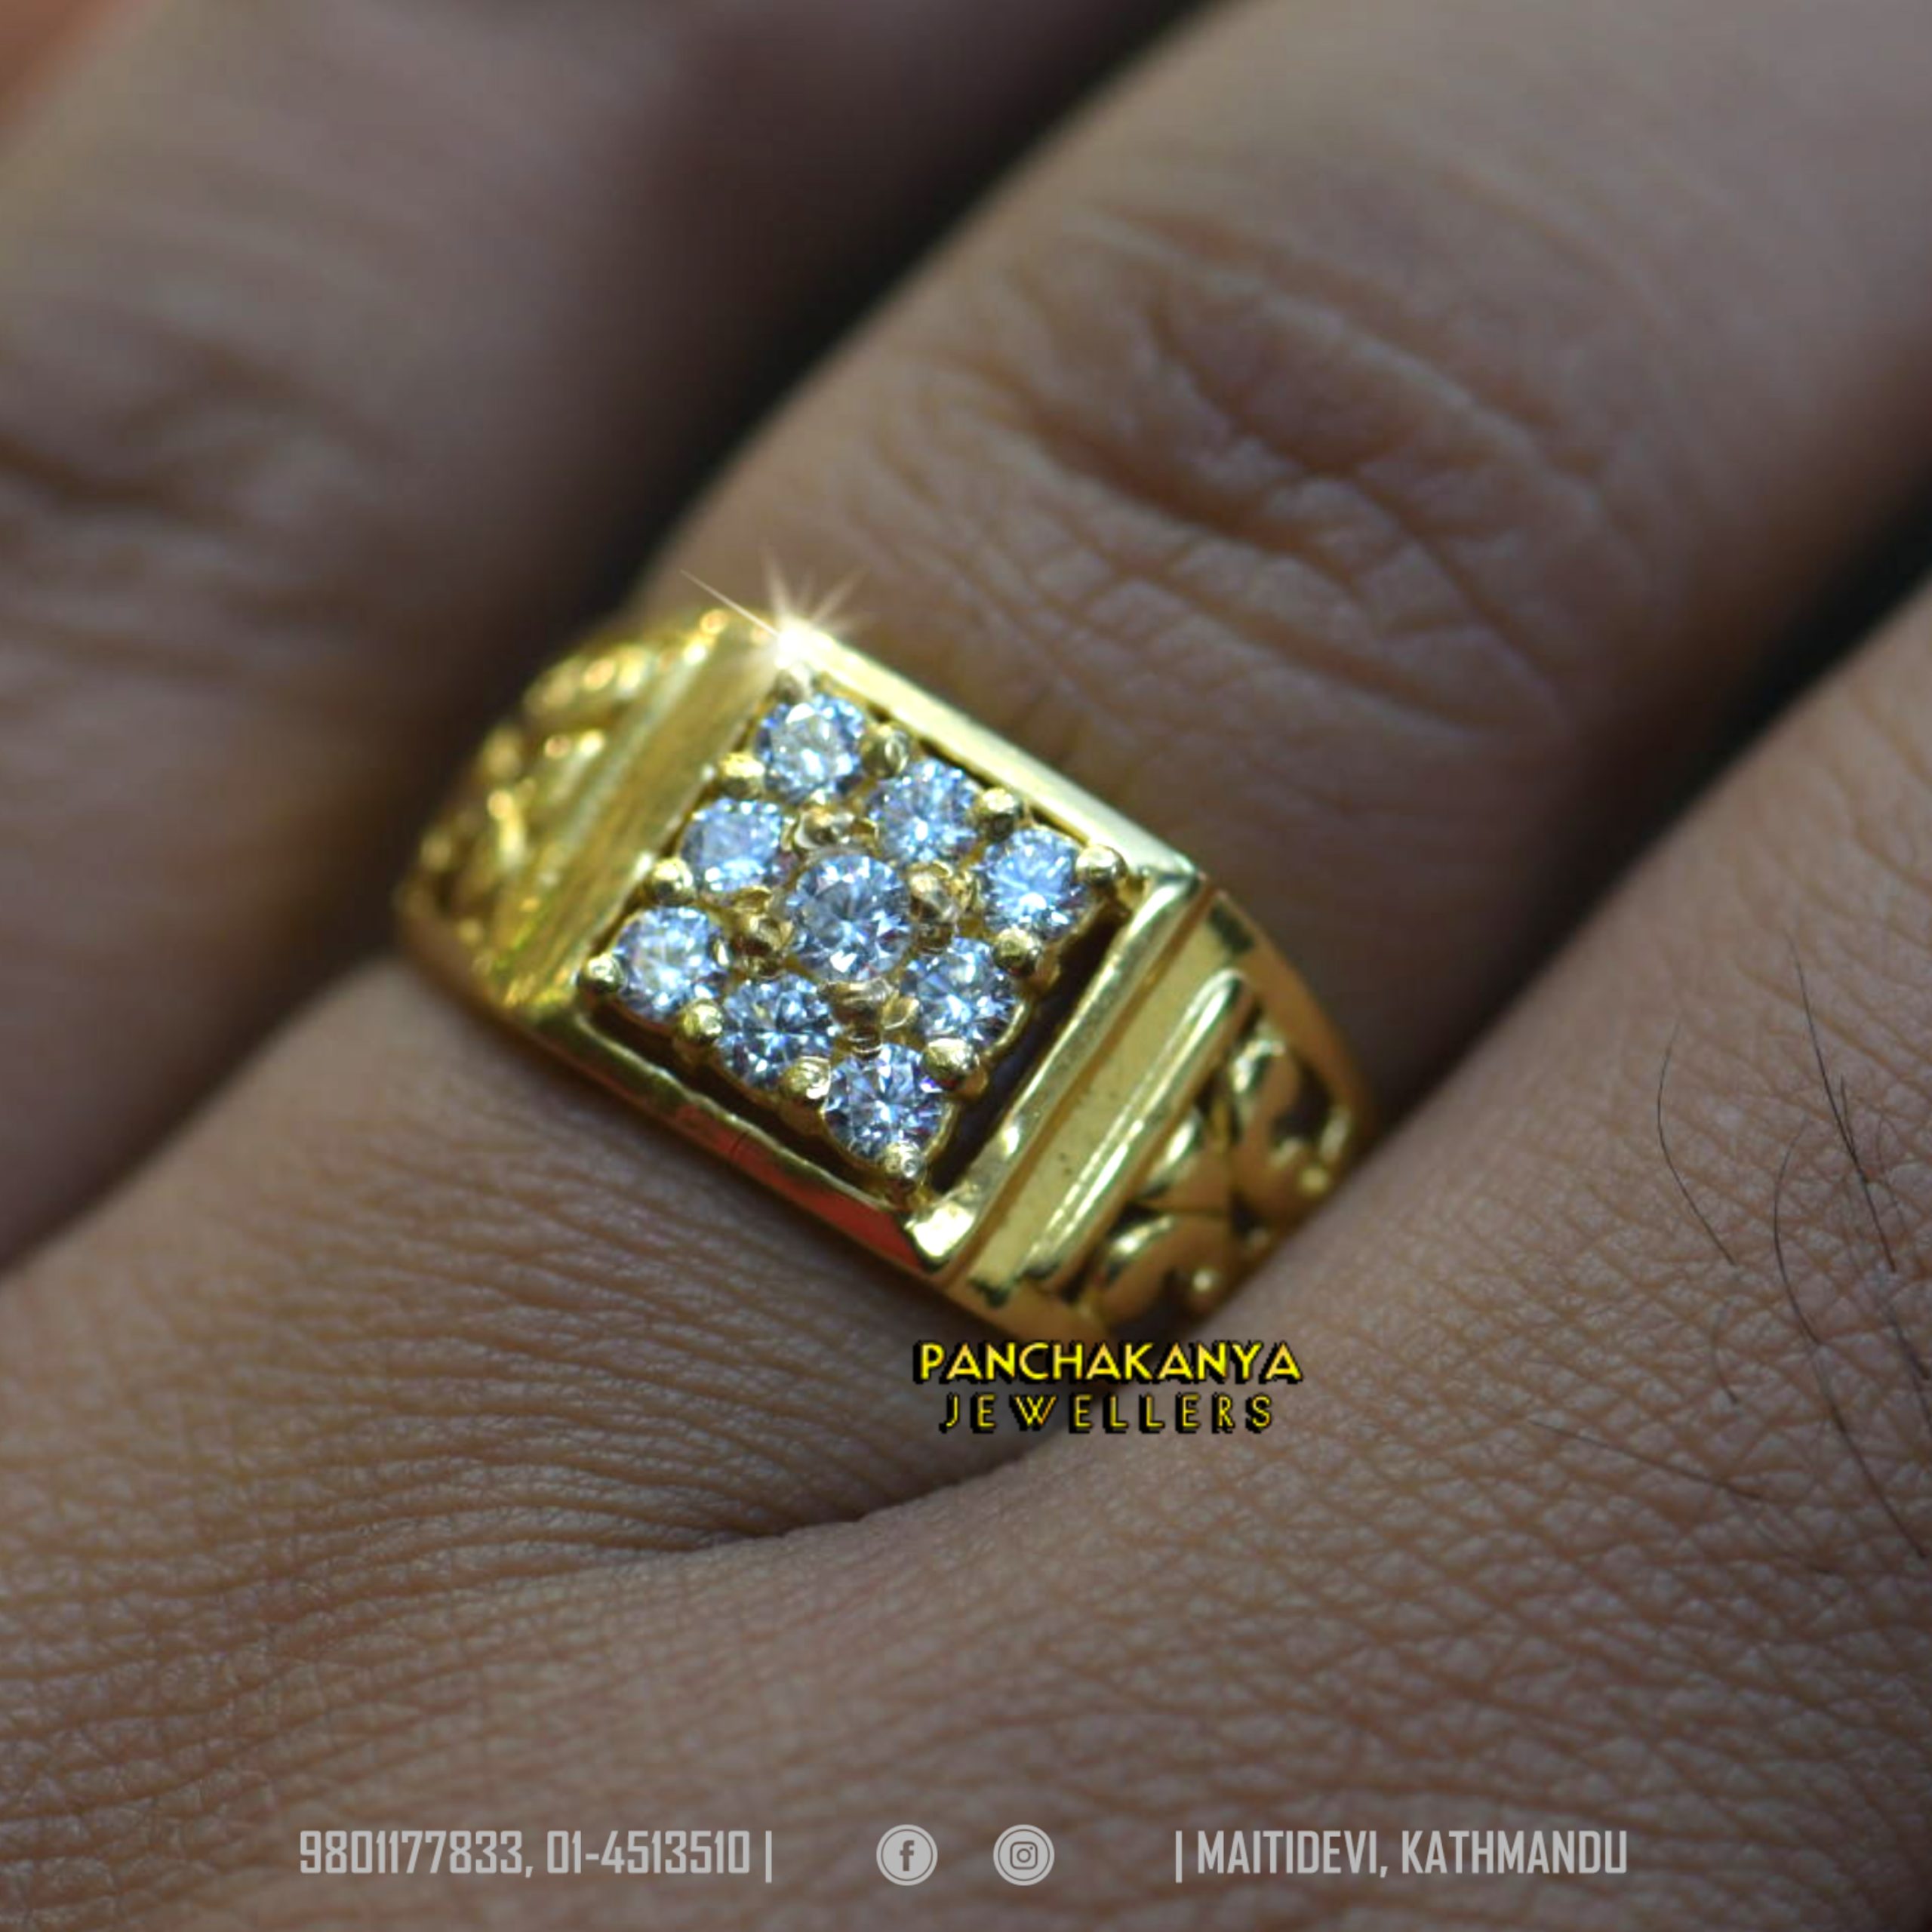 Buy quality Kalkati fancy ring in Ahmedabad